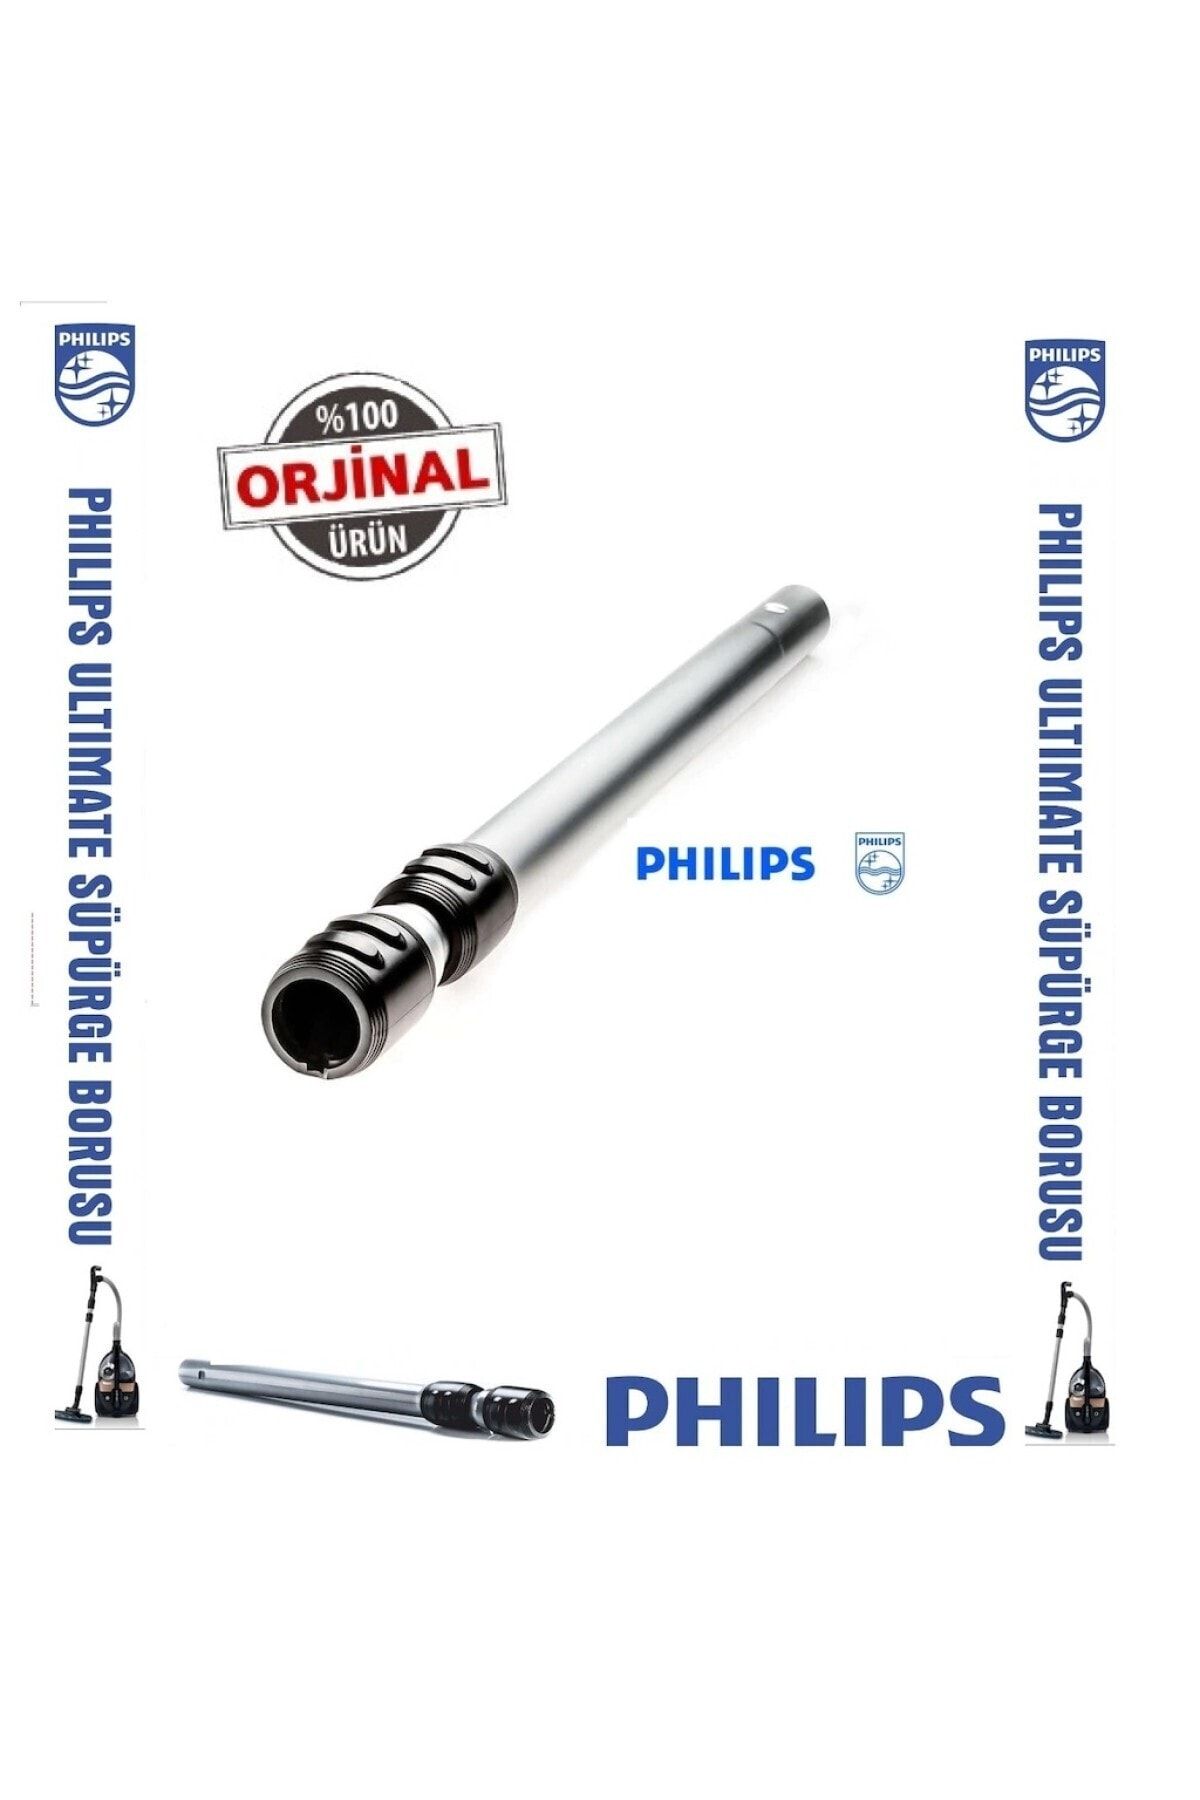 Philips Fc 9923 Marathon Ultimate Orijinal Çelik Süpürge Borusu